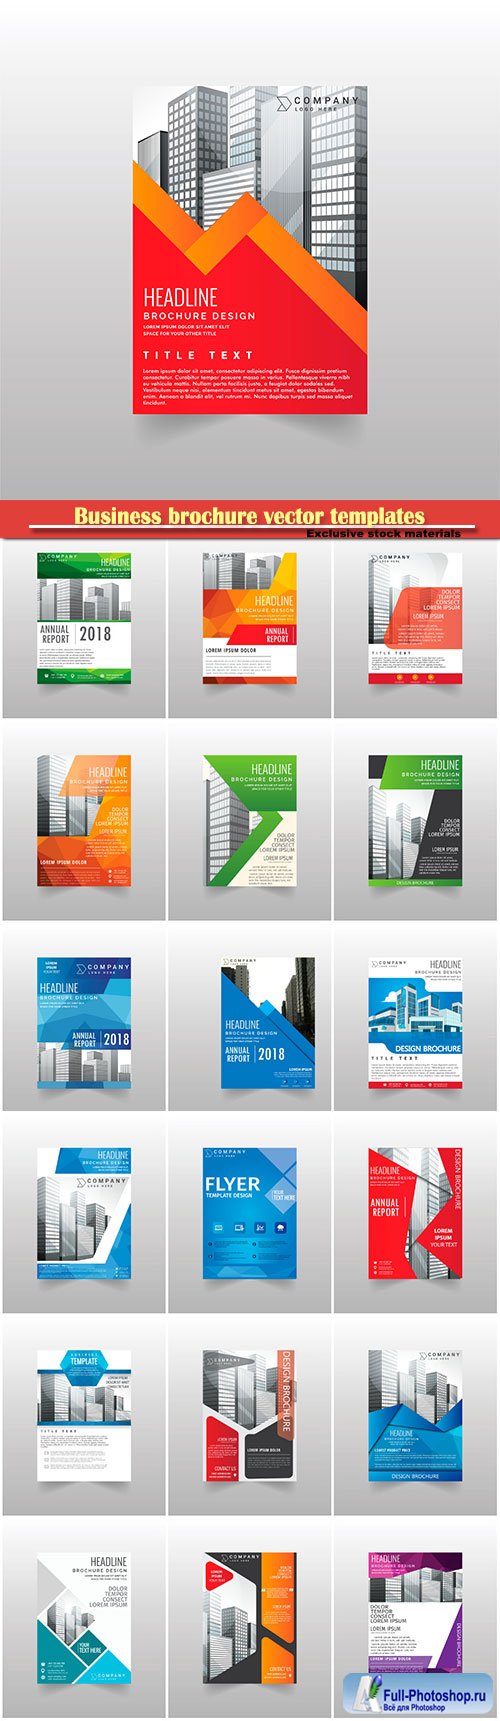 Business brochure vector templates, magazine cover, business mockup, education, presentation, report # 64